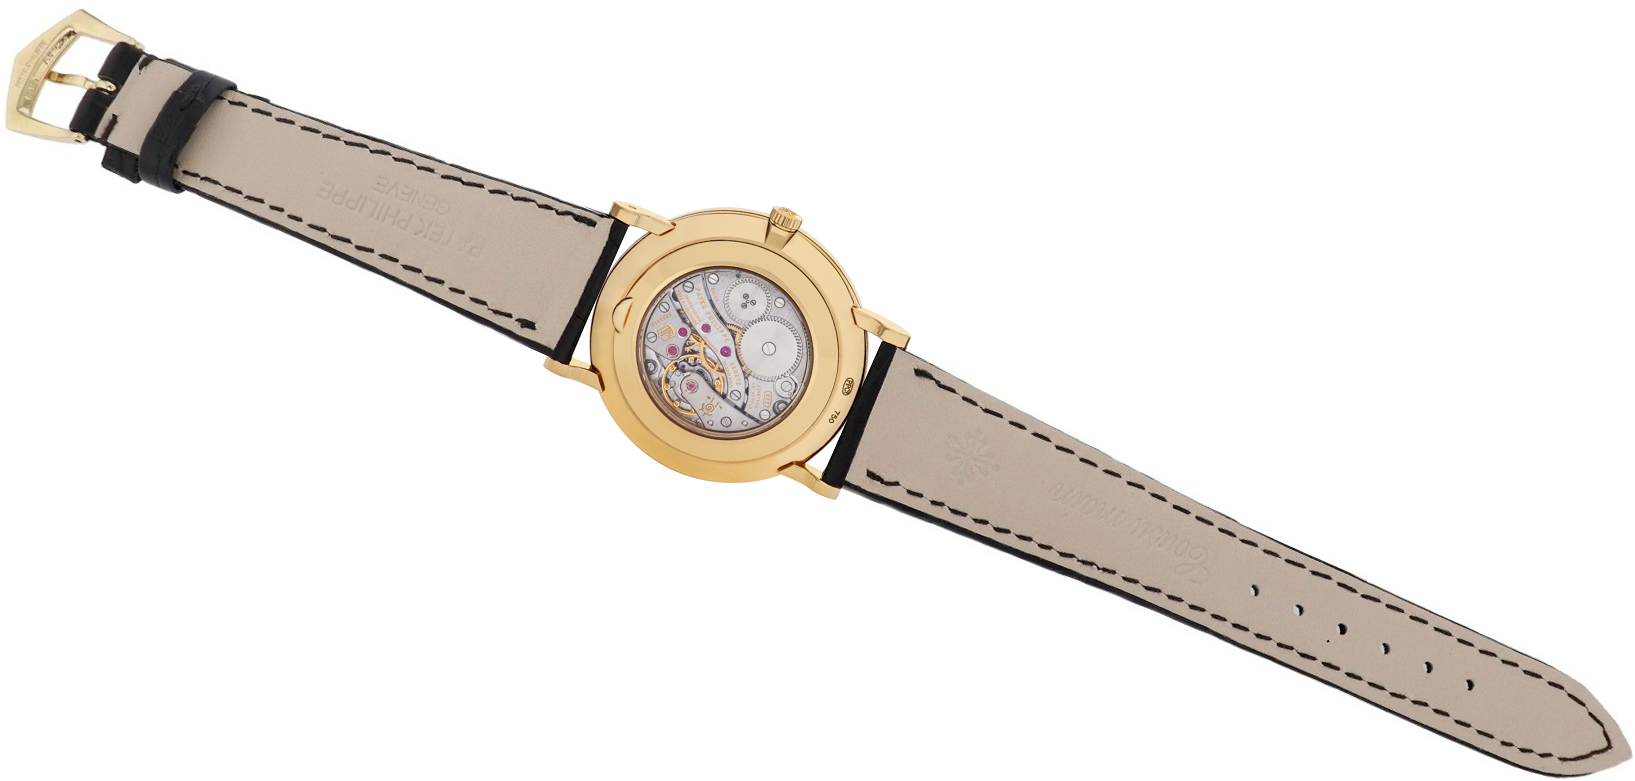 Patek Philippe Calatrava 5119J 36mm - Trade Watches Inc.